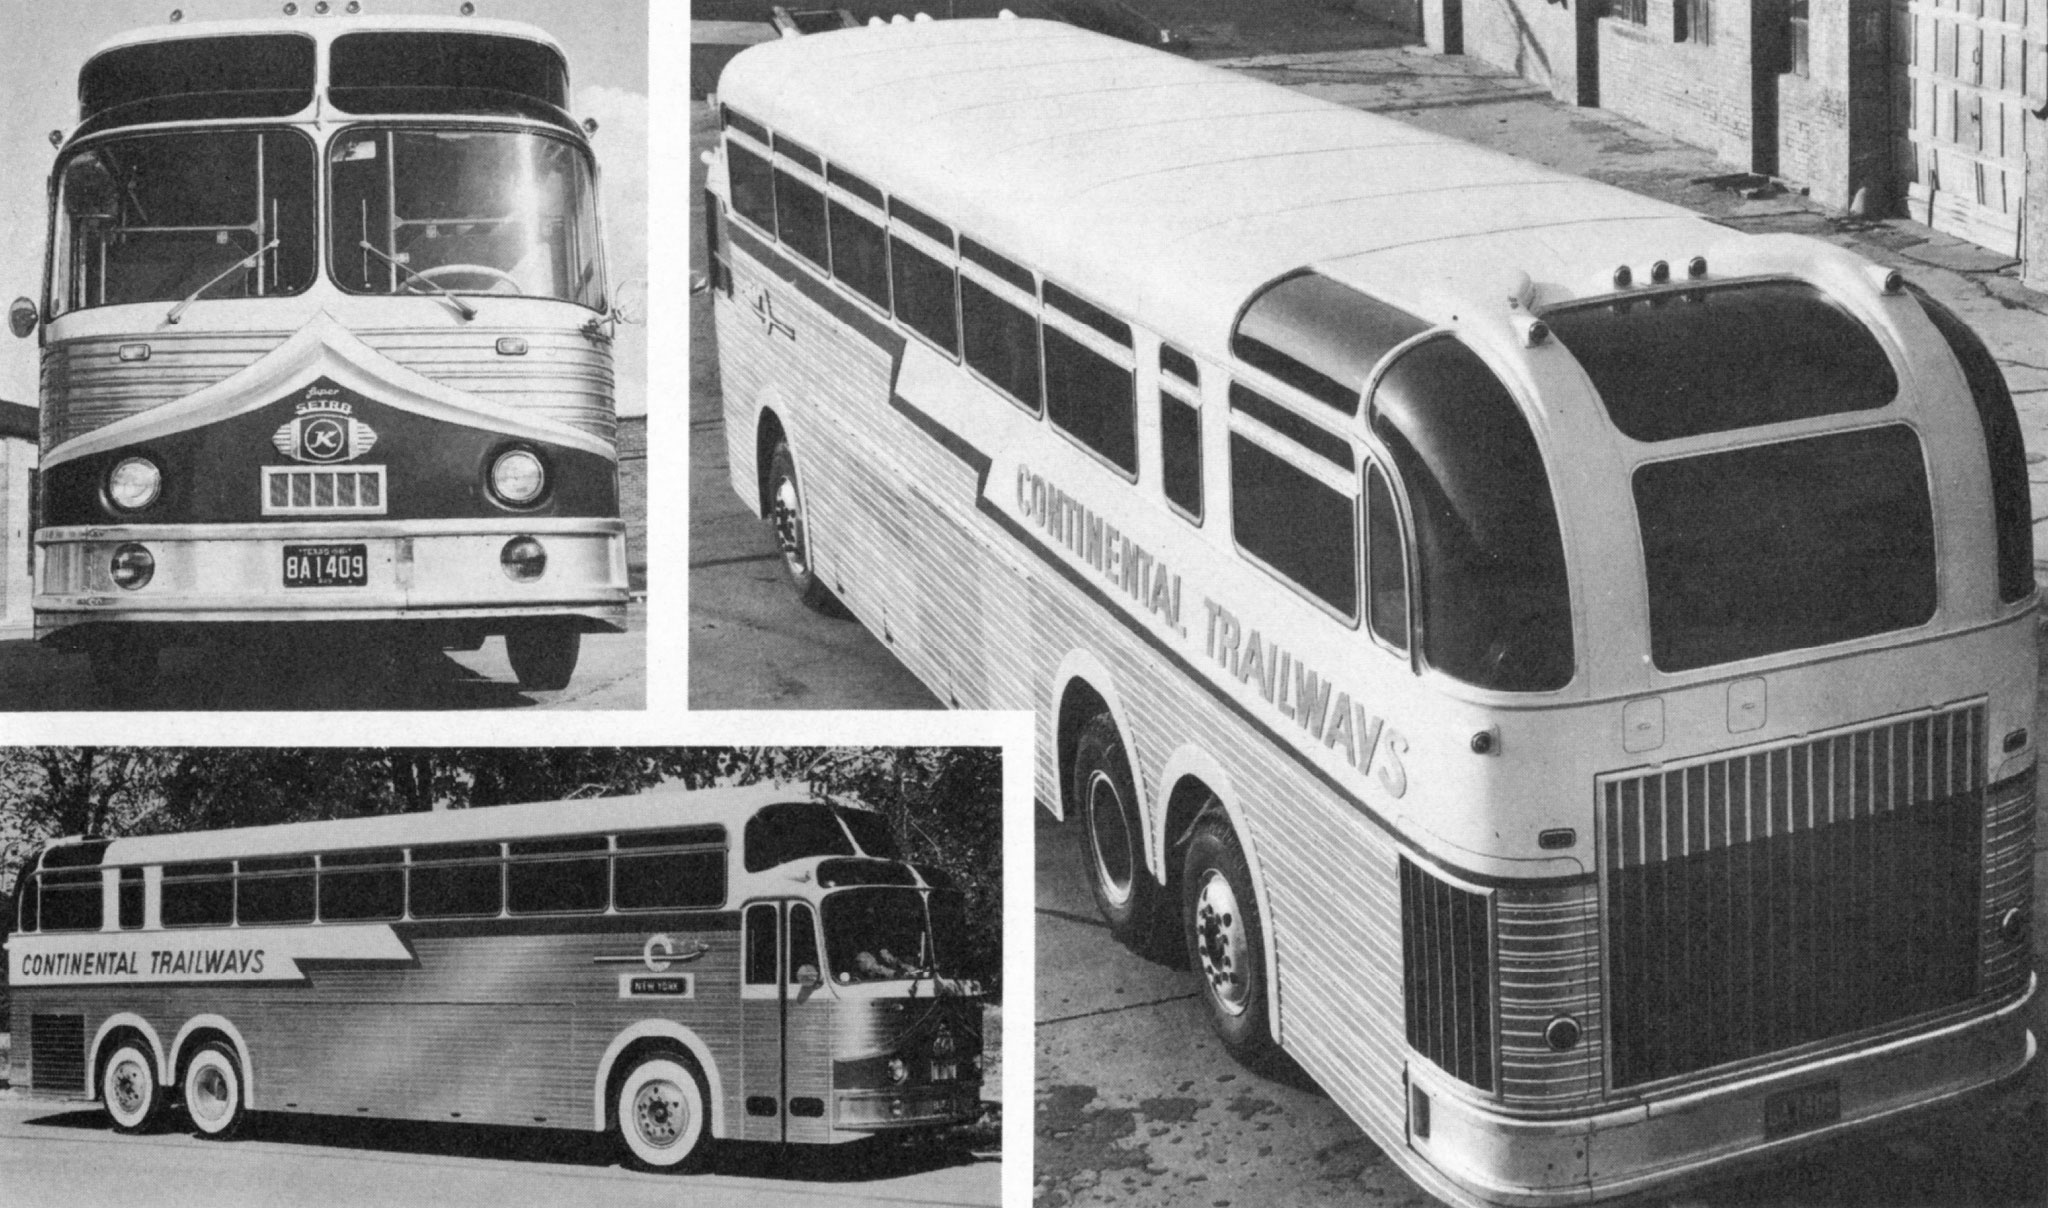 1956 Golden Eagle bus prototype.